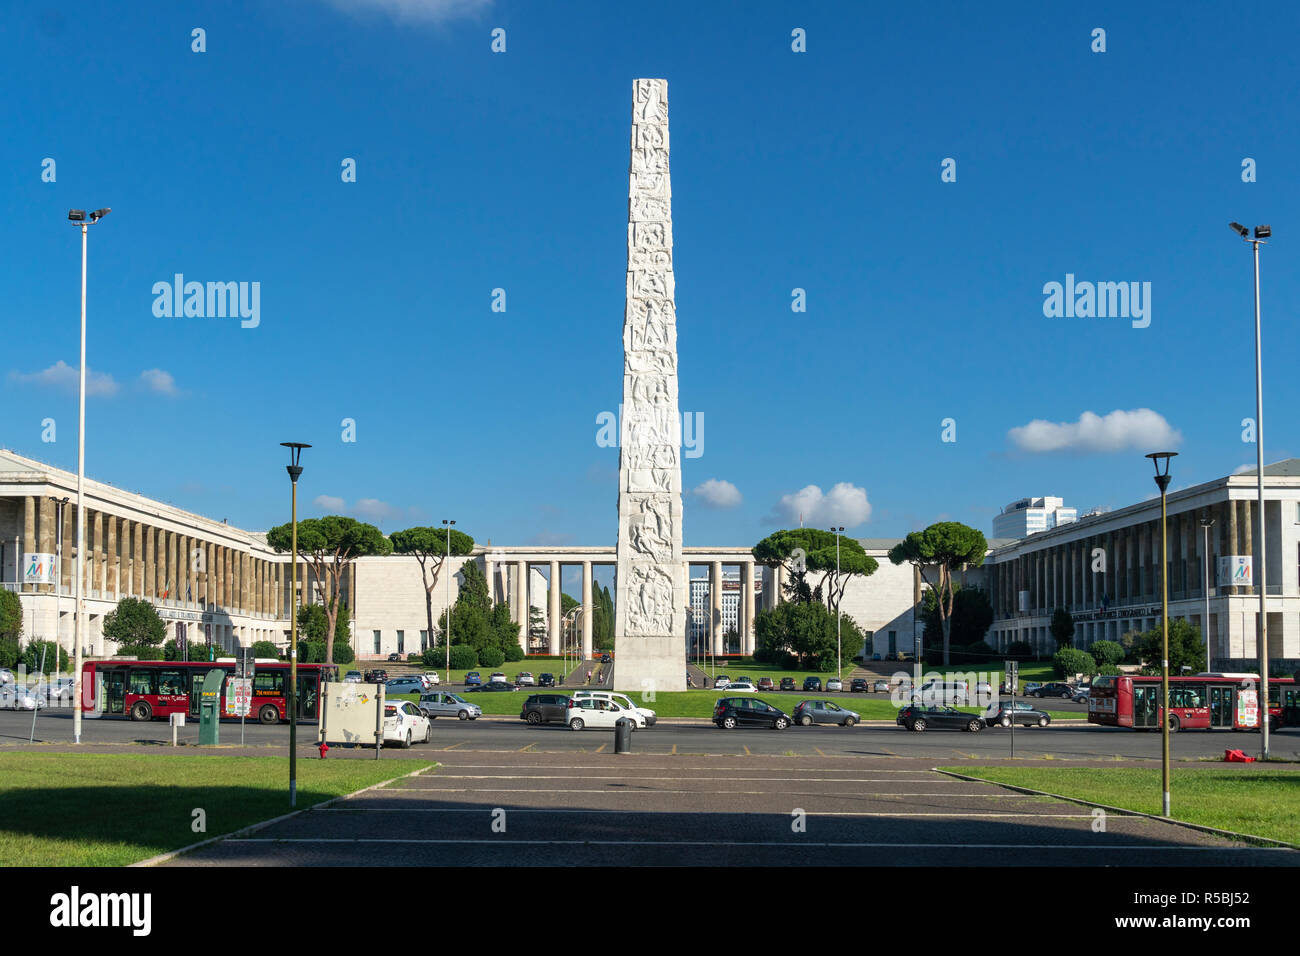 The Obelisk of Marconi in the Piazza Guglielmo Marconi, built for the Esposizione Universale Roma  1942.  EUR, Rome, Italy. Stock Photo